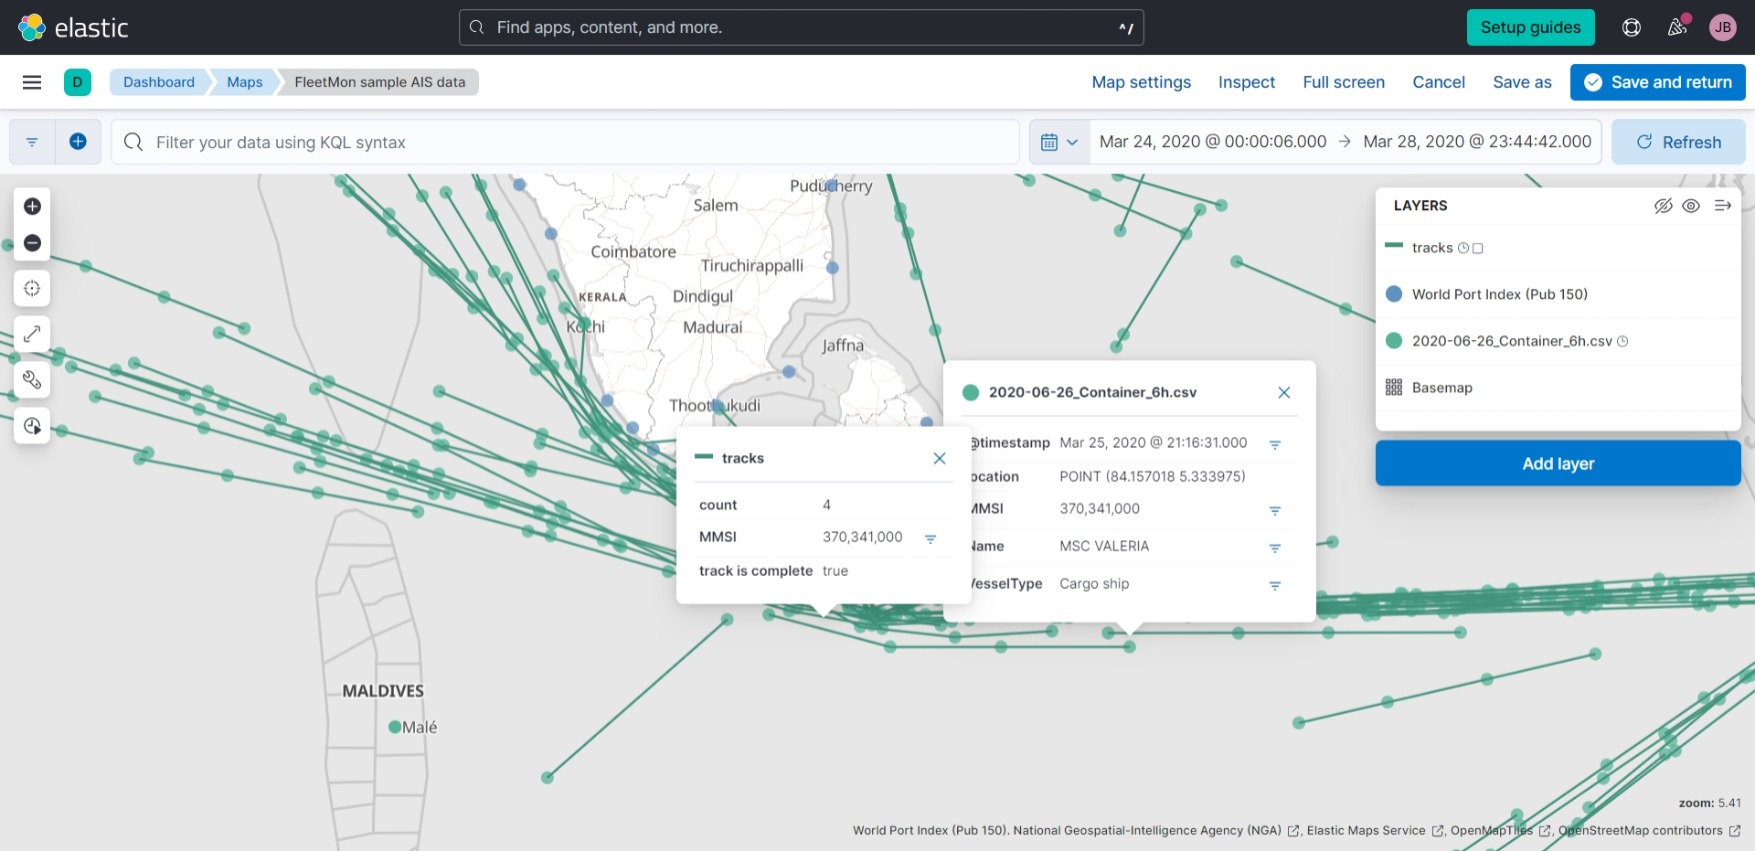 Indian Ocean ship tracks using FleetMon sample AIS data